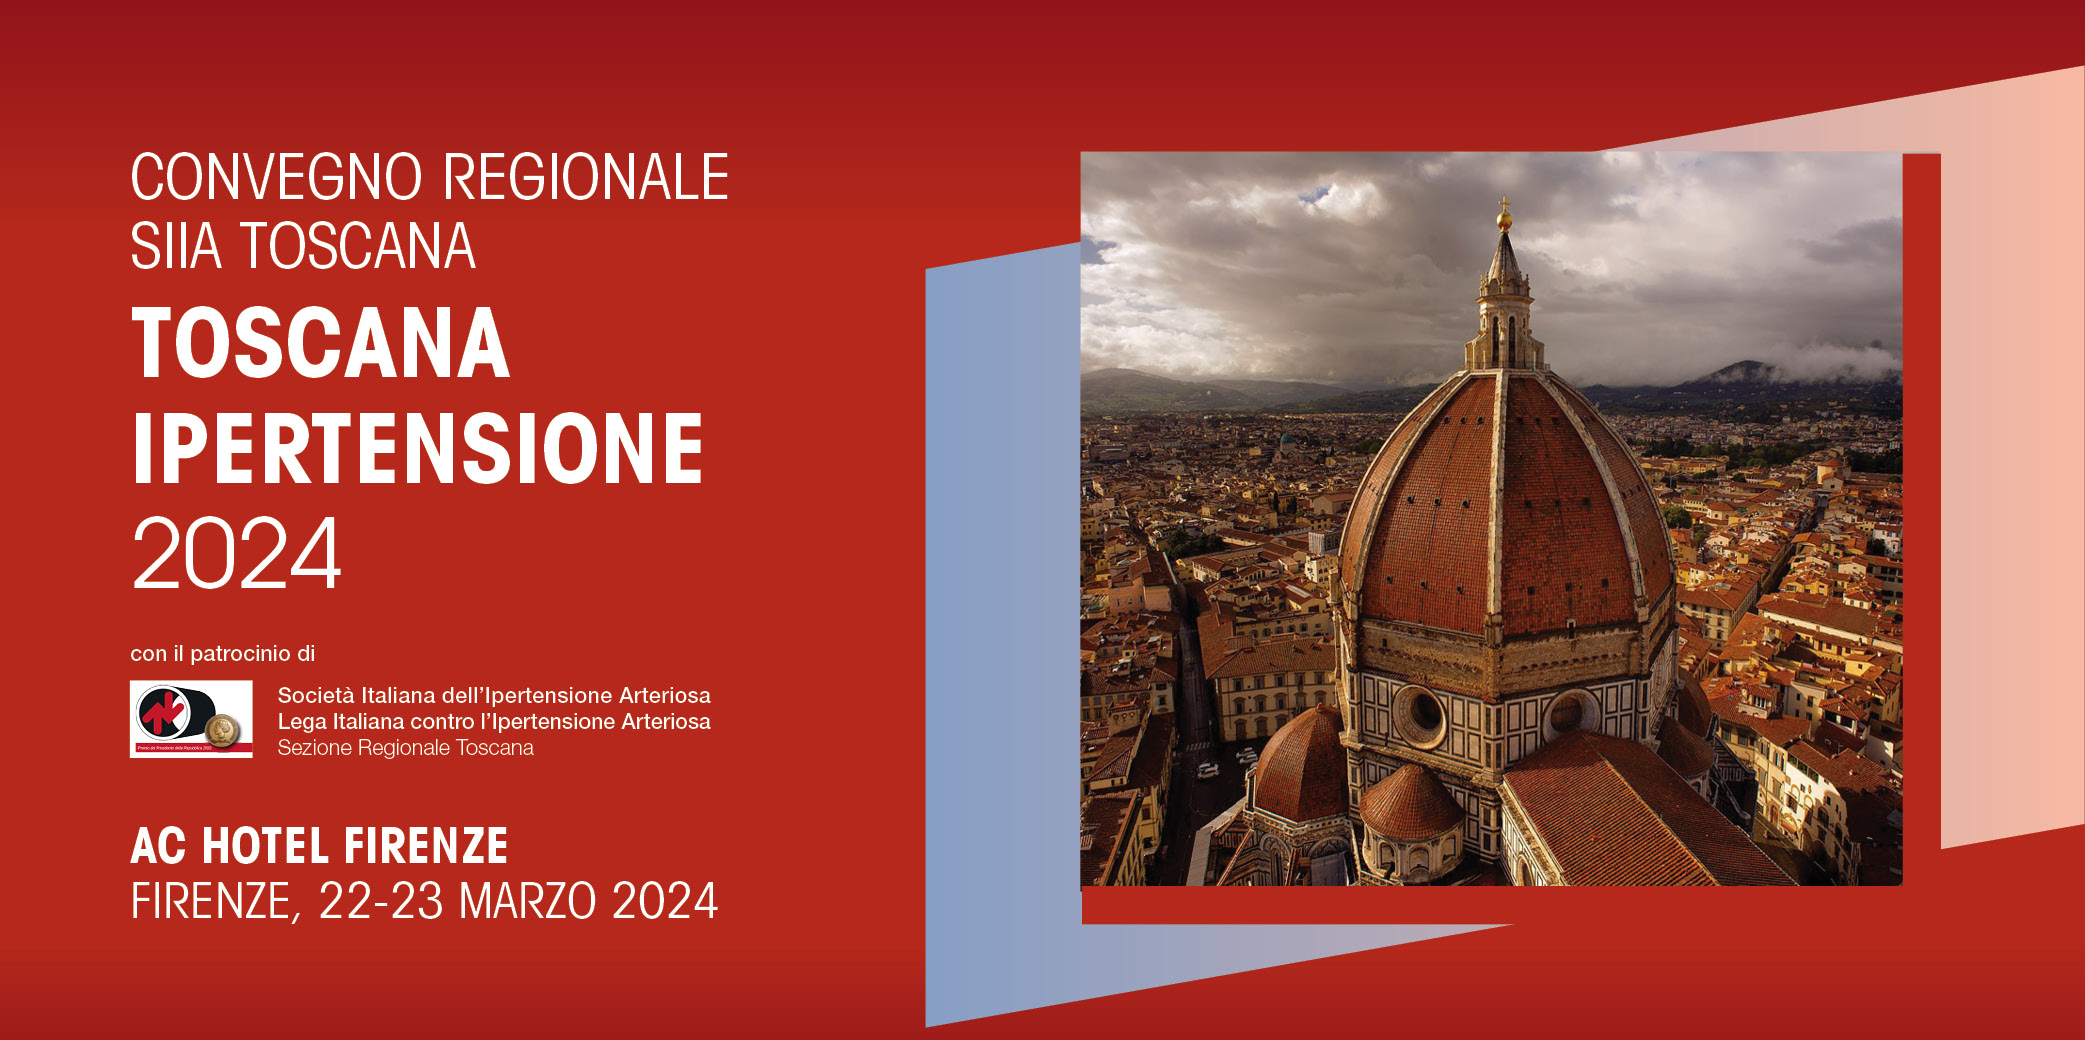 CONVEGNO REGIONALE SIIA TOSCANA – “Toscana Ipertensione 2024” – Firenze, 22- 23 Marzo 2024